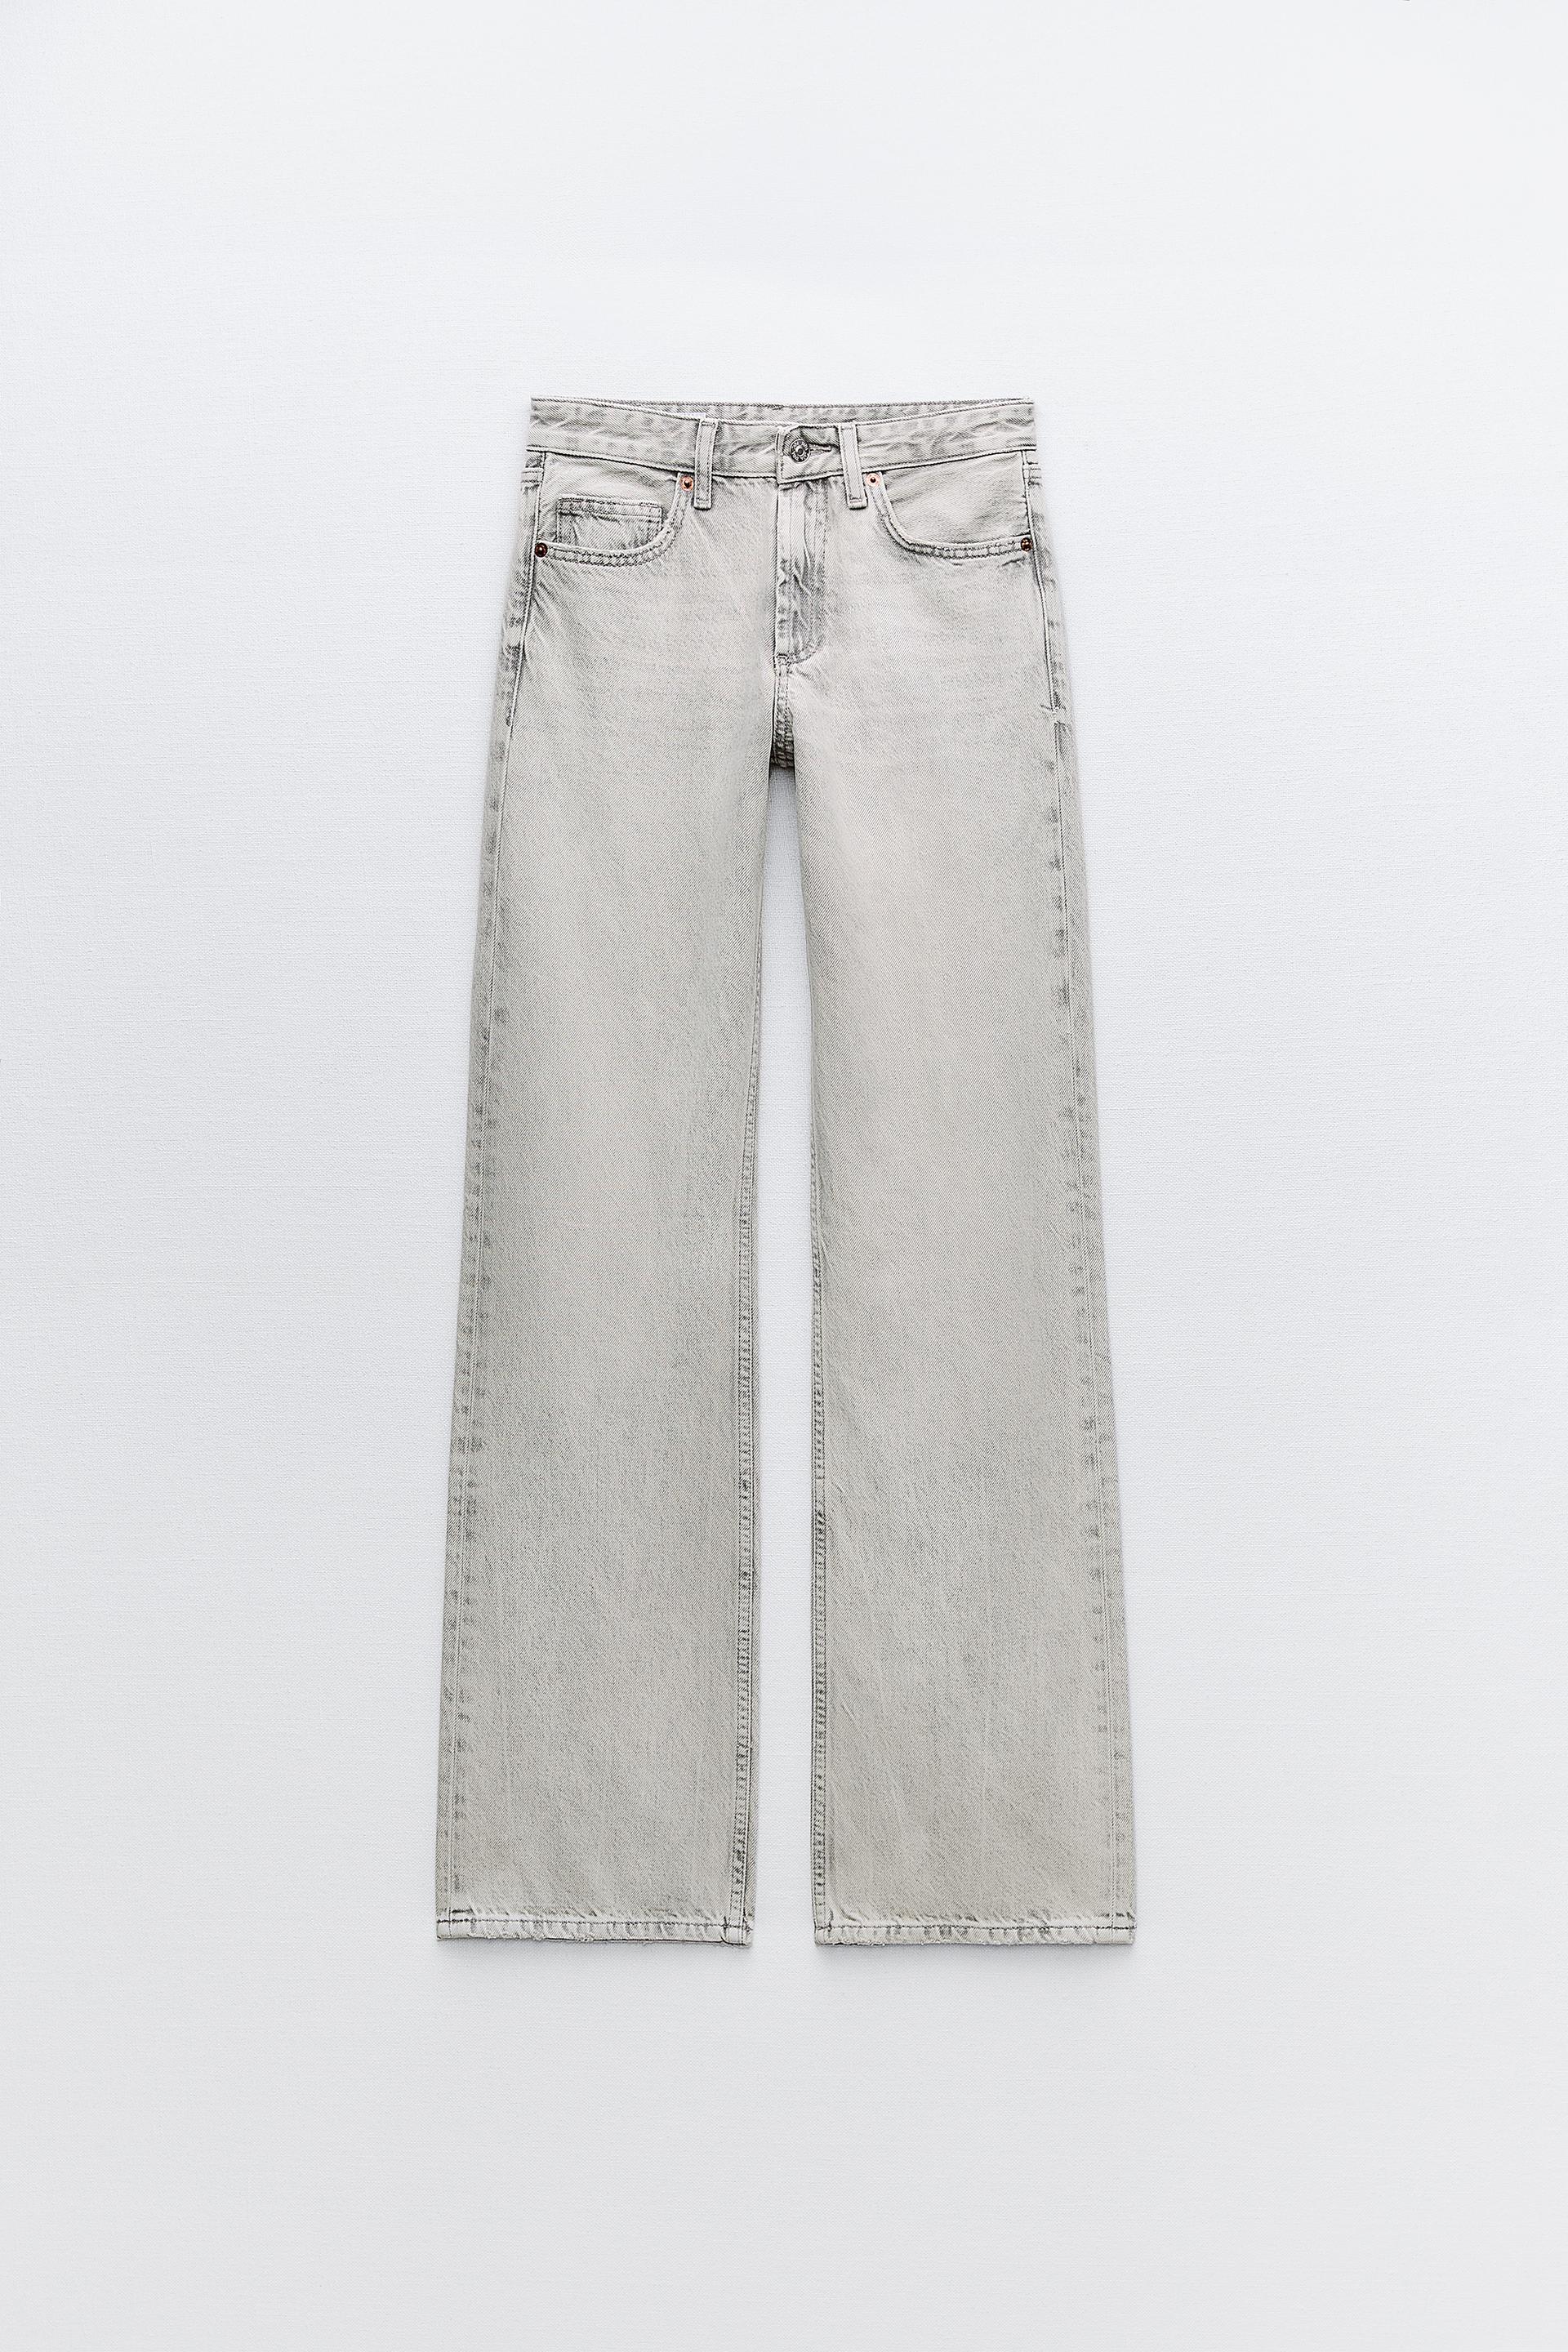 Джинсы Zara Trf Wide-leg Full Length, светло-серый джинсы zara trf wide leg full length светло серый